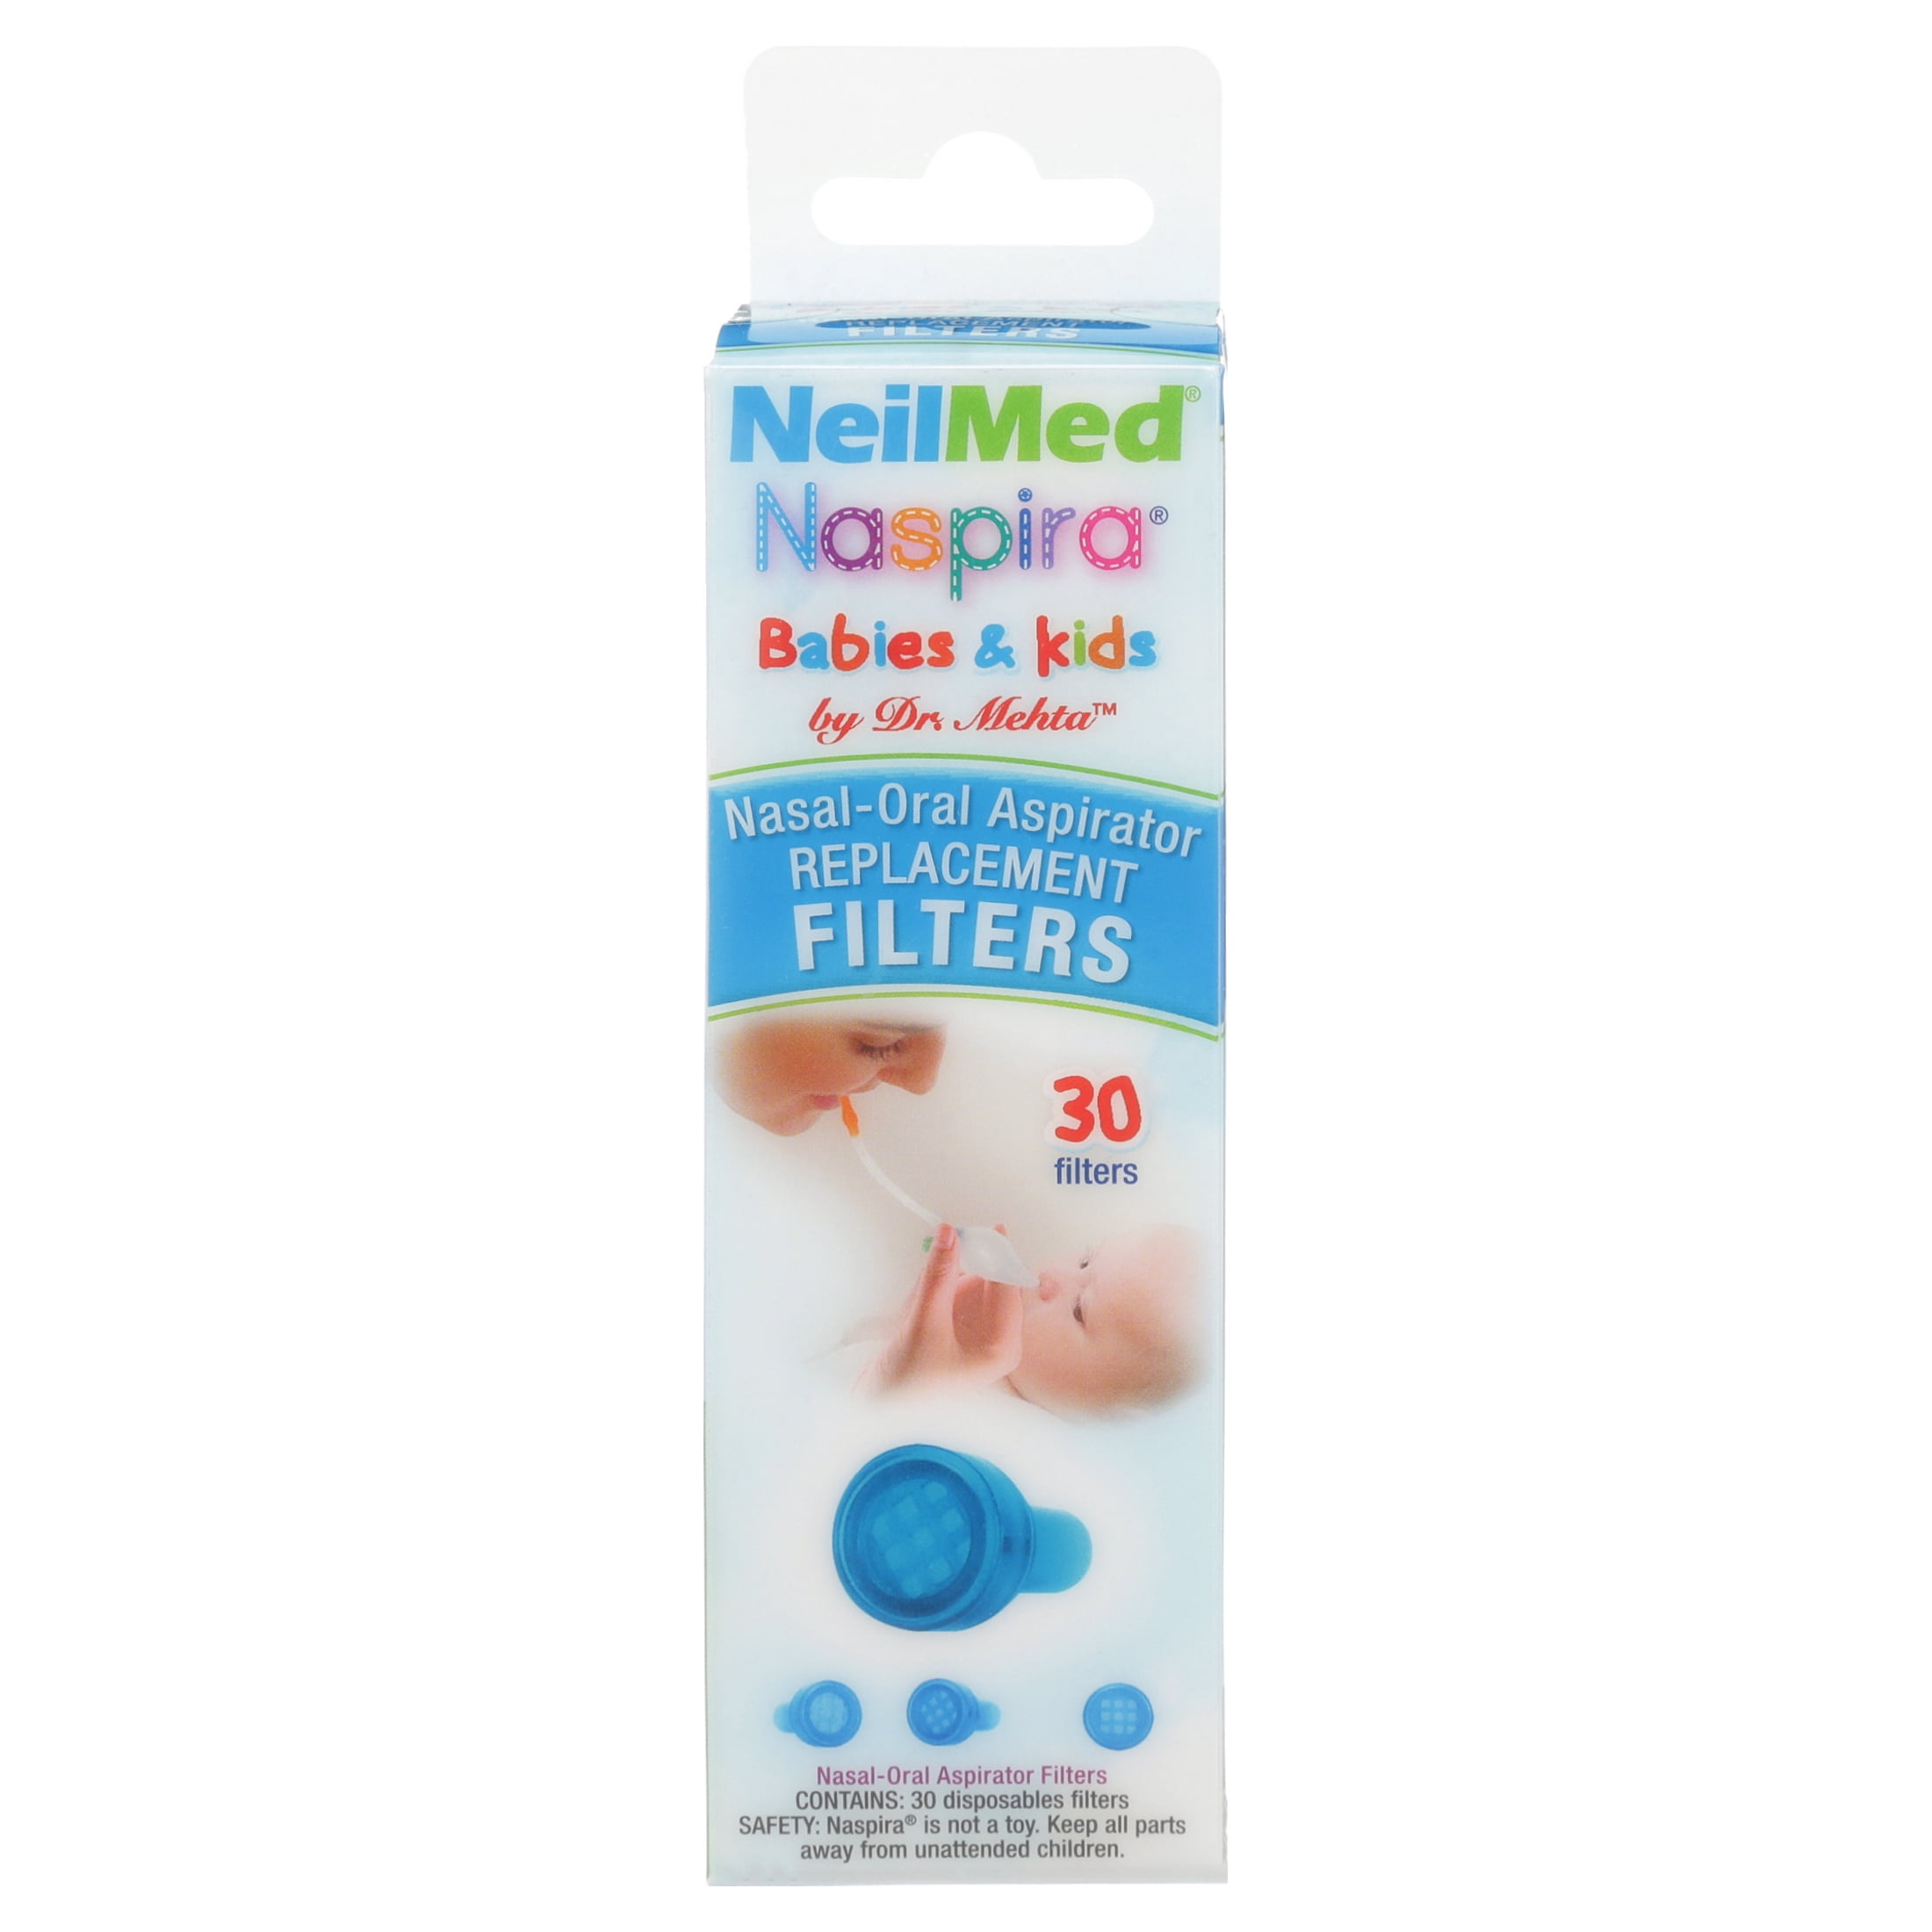 NeilMed Naspira Filter Replacements for Babies & Kids, 30 CT